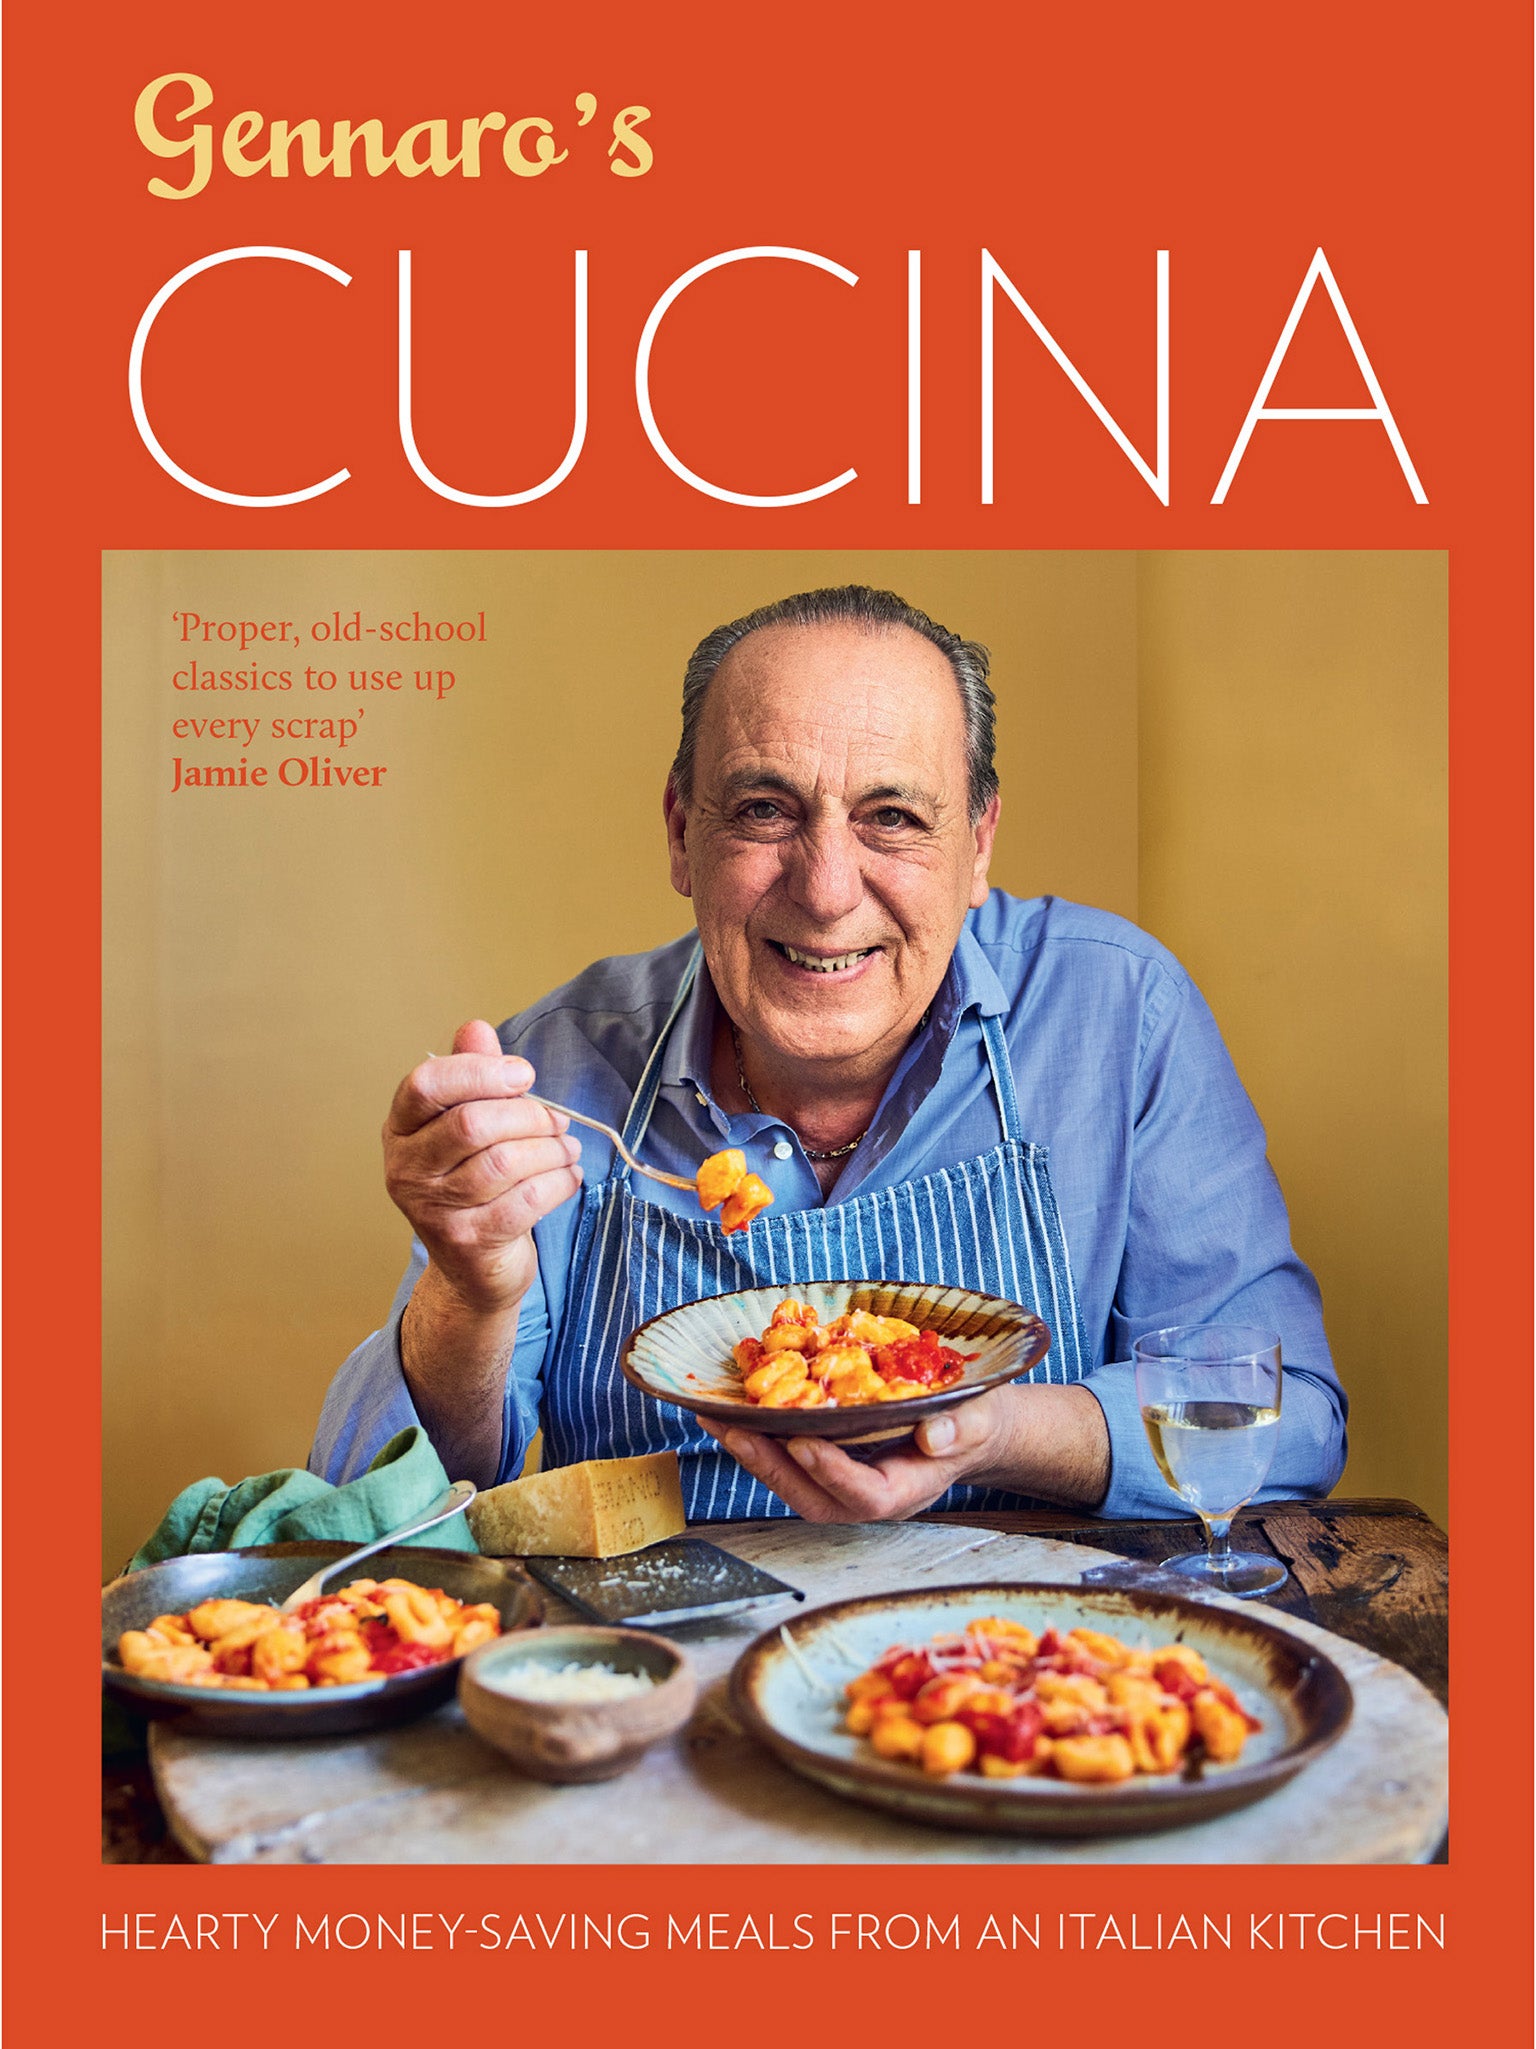 ‘Gennaro’s Cucina’ focuses on hearty, money-saving meals